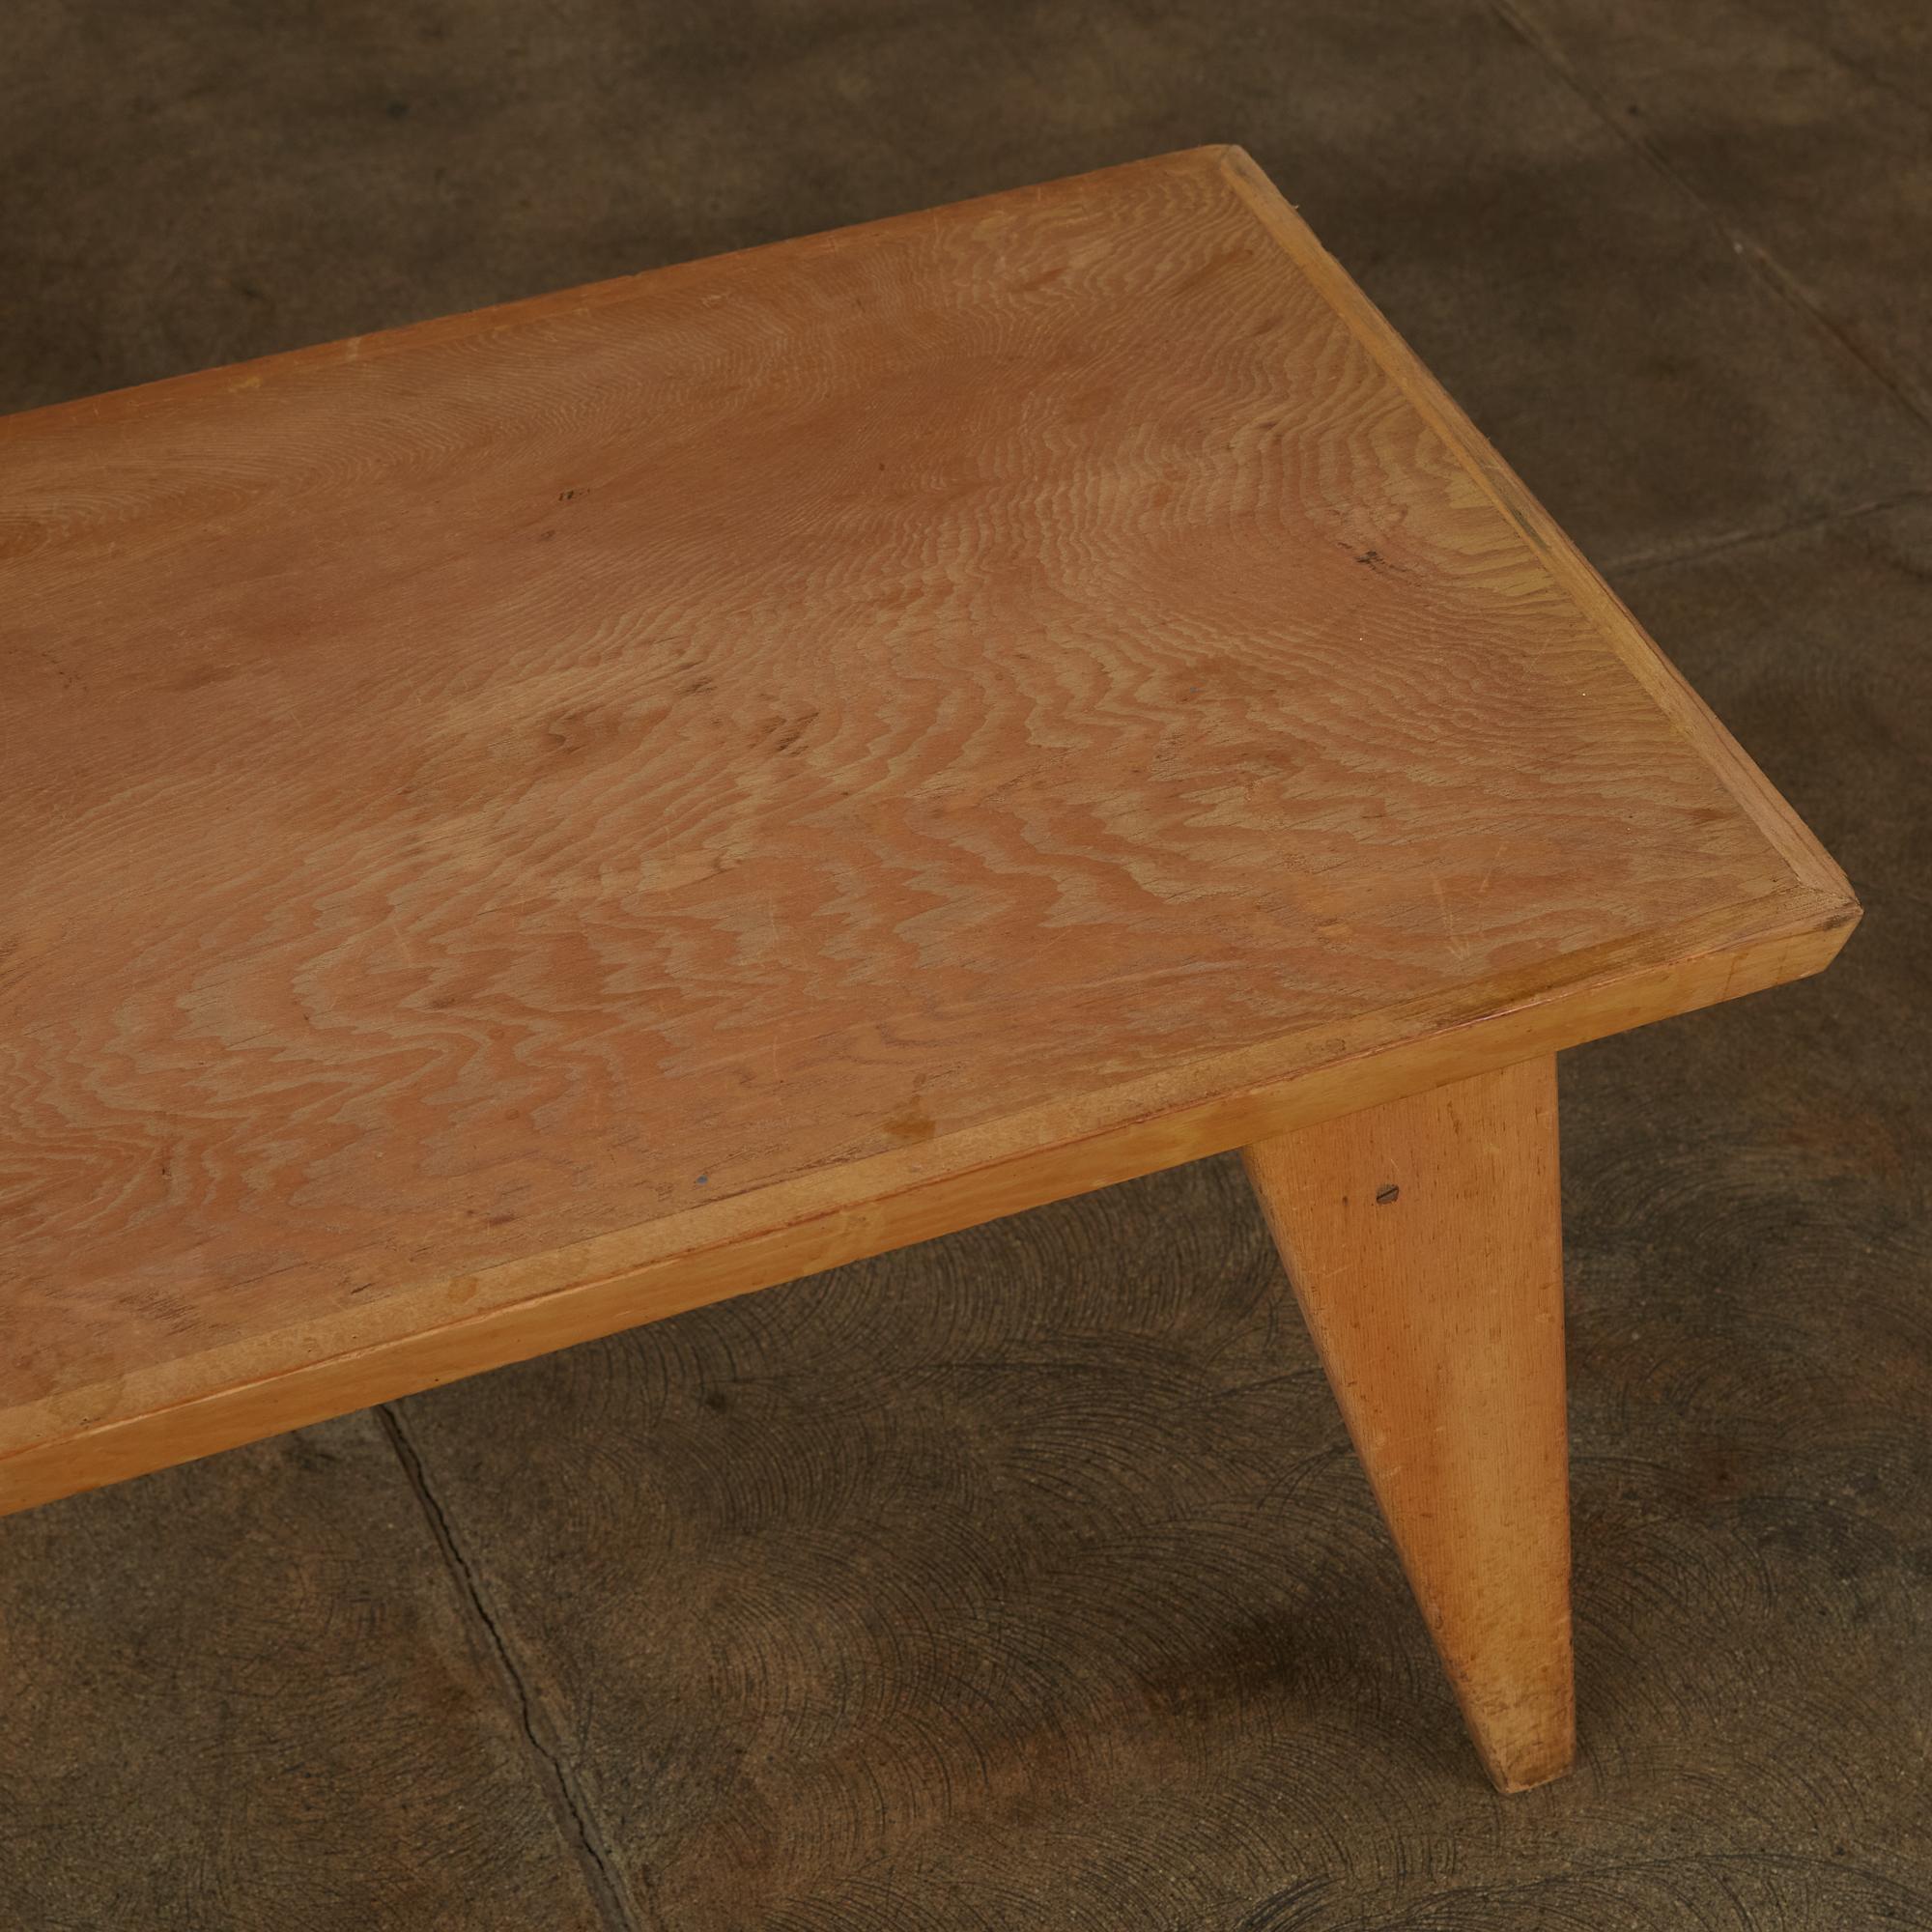 Studio Craft Patinated Wood Coffee Table 10